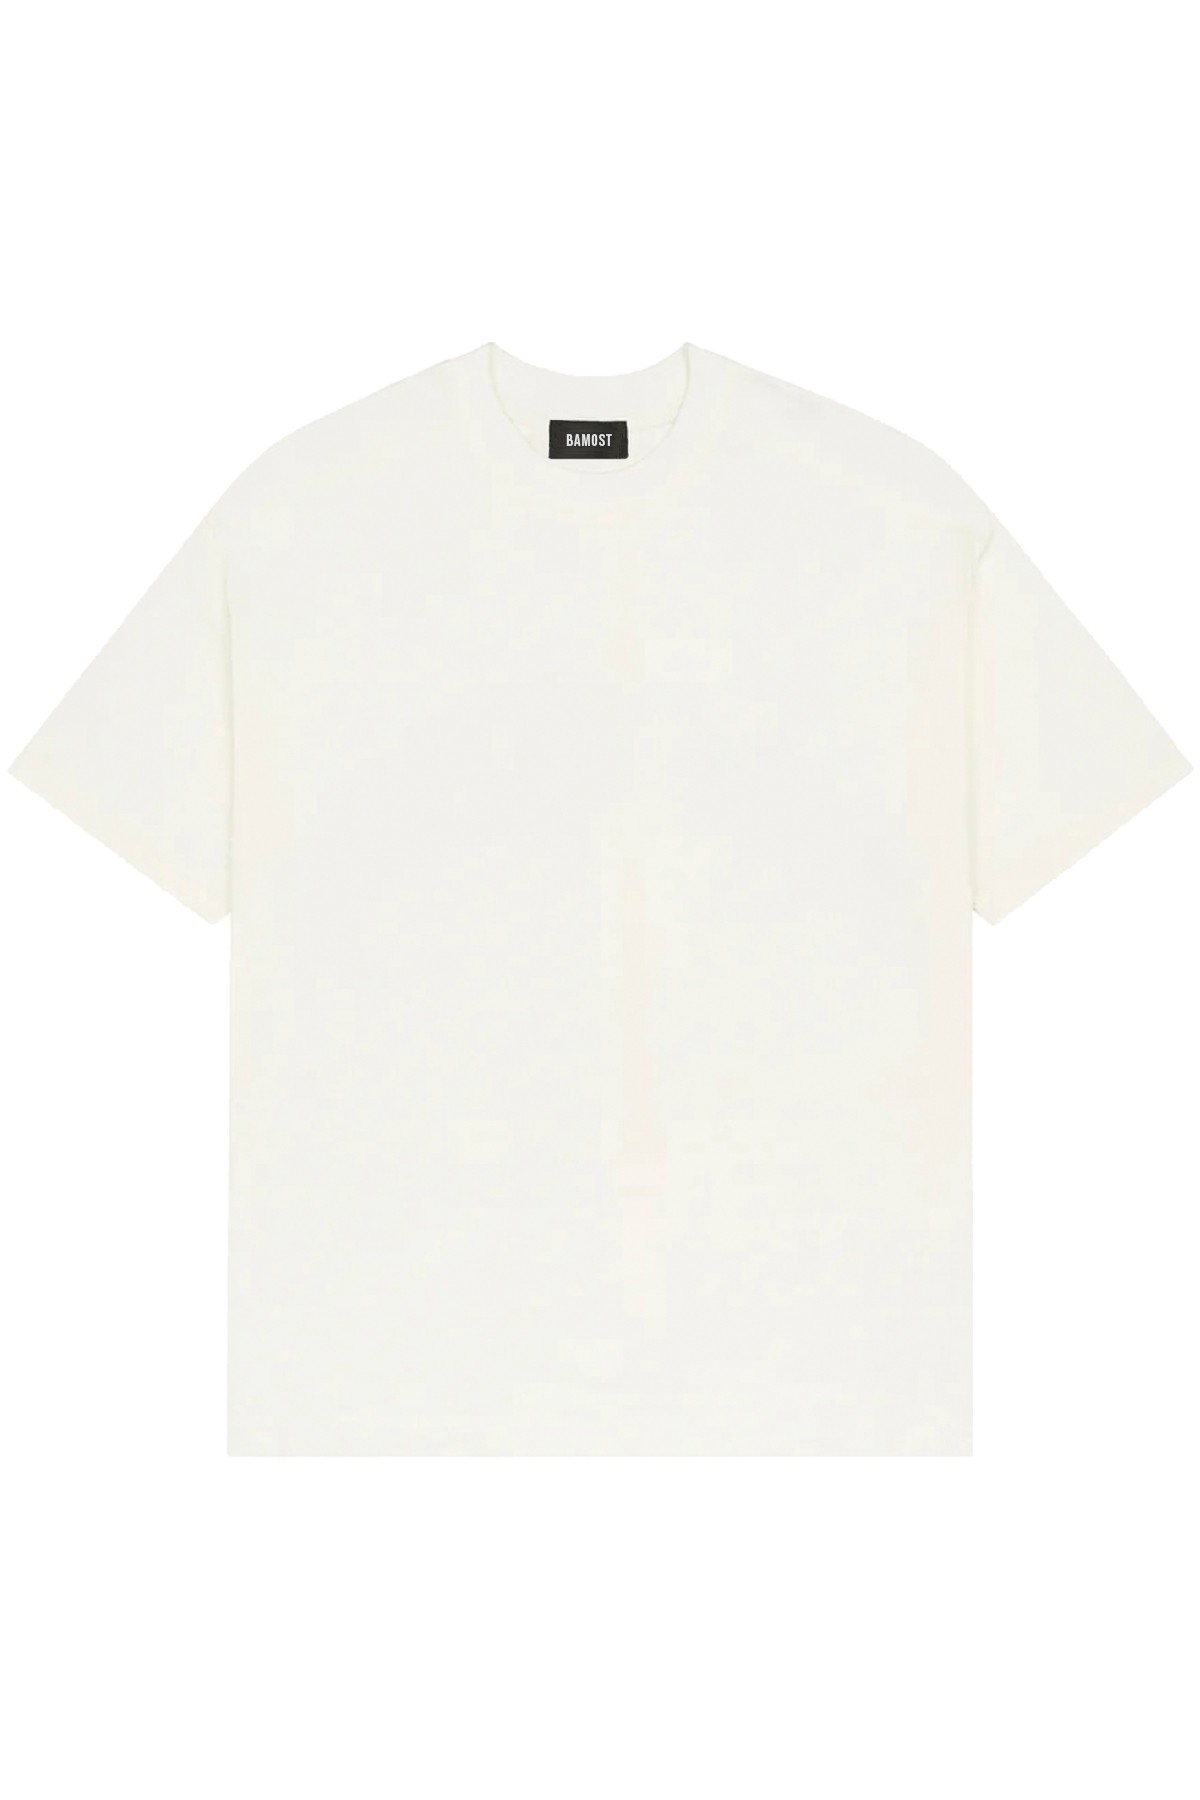 Boris - Comfort Basic T-Shirt - OFF WHITE